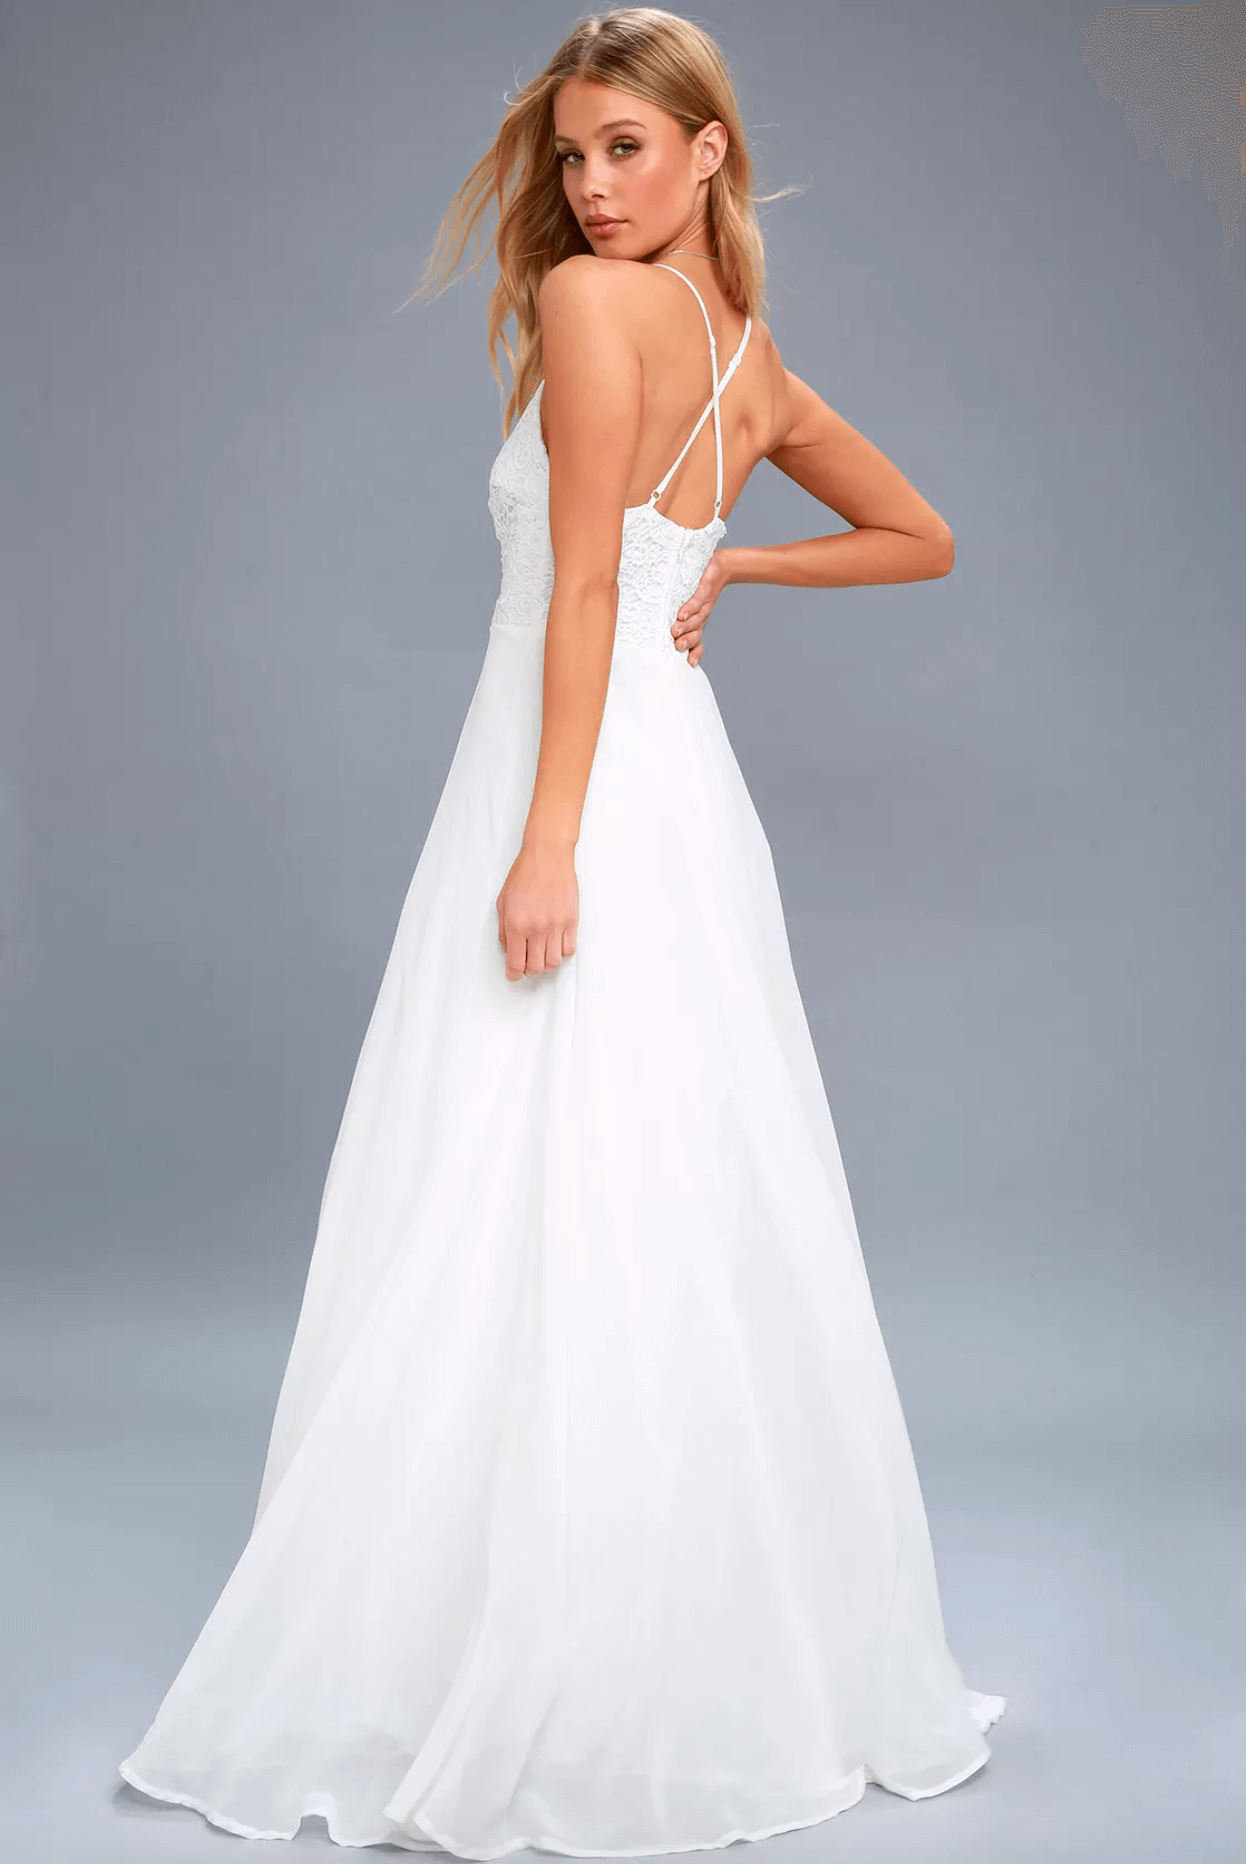 Elopement Wedding Dress Casual Simple White Lace Maxi Dress Intimate Wedding Dress Romantic